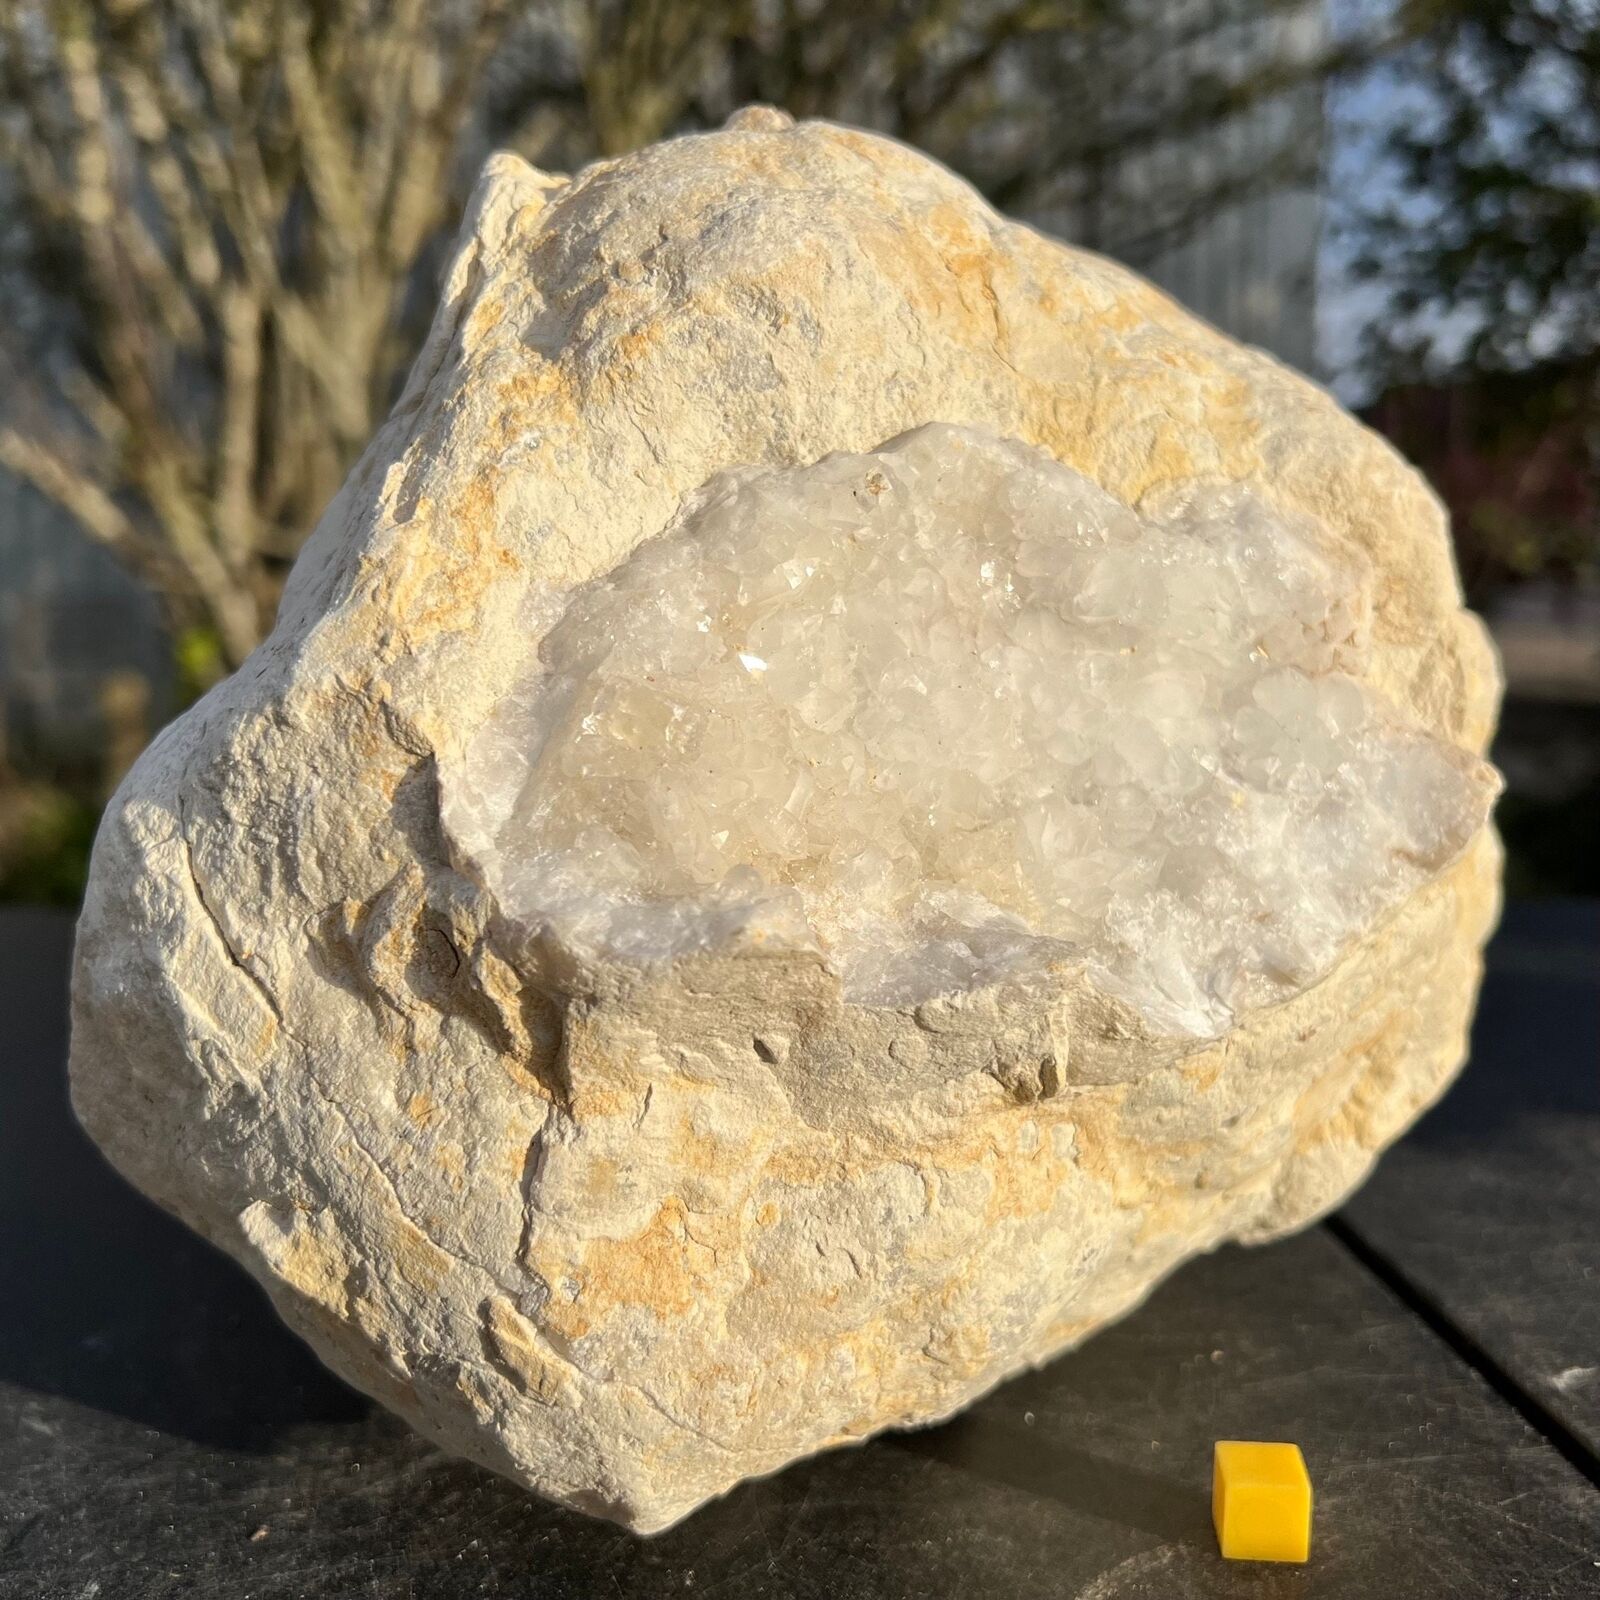 Giant cracked quartz geode - genuine healing crystal stone - certified